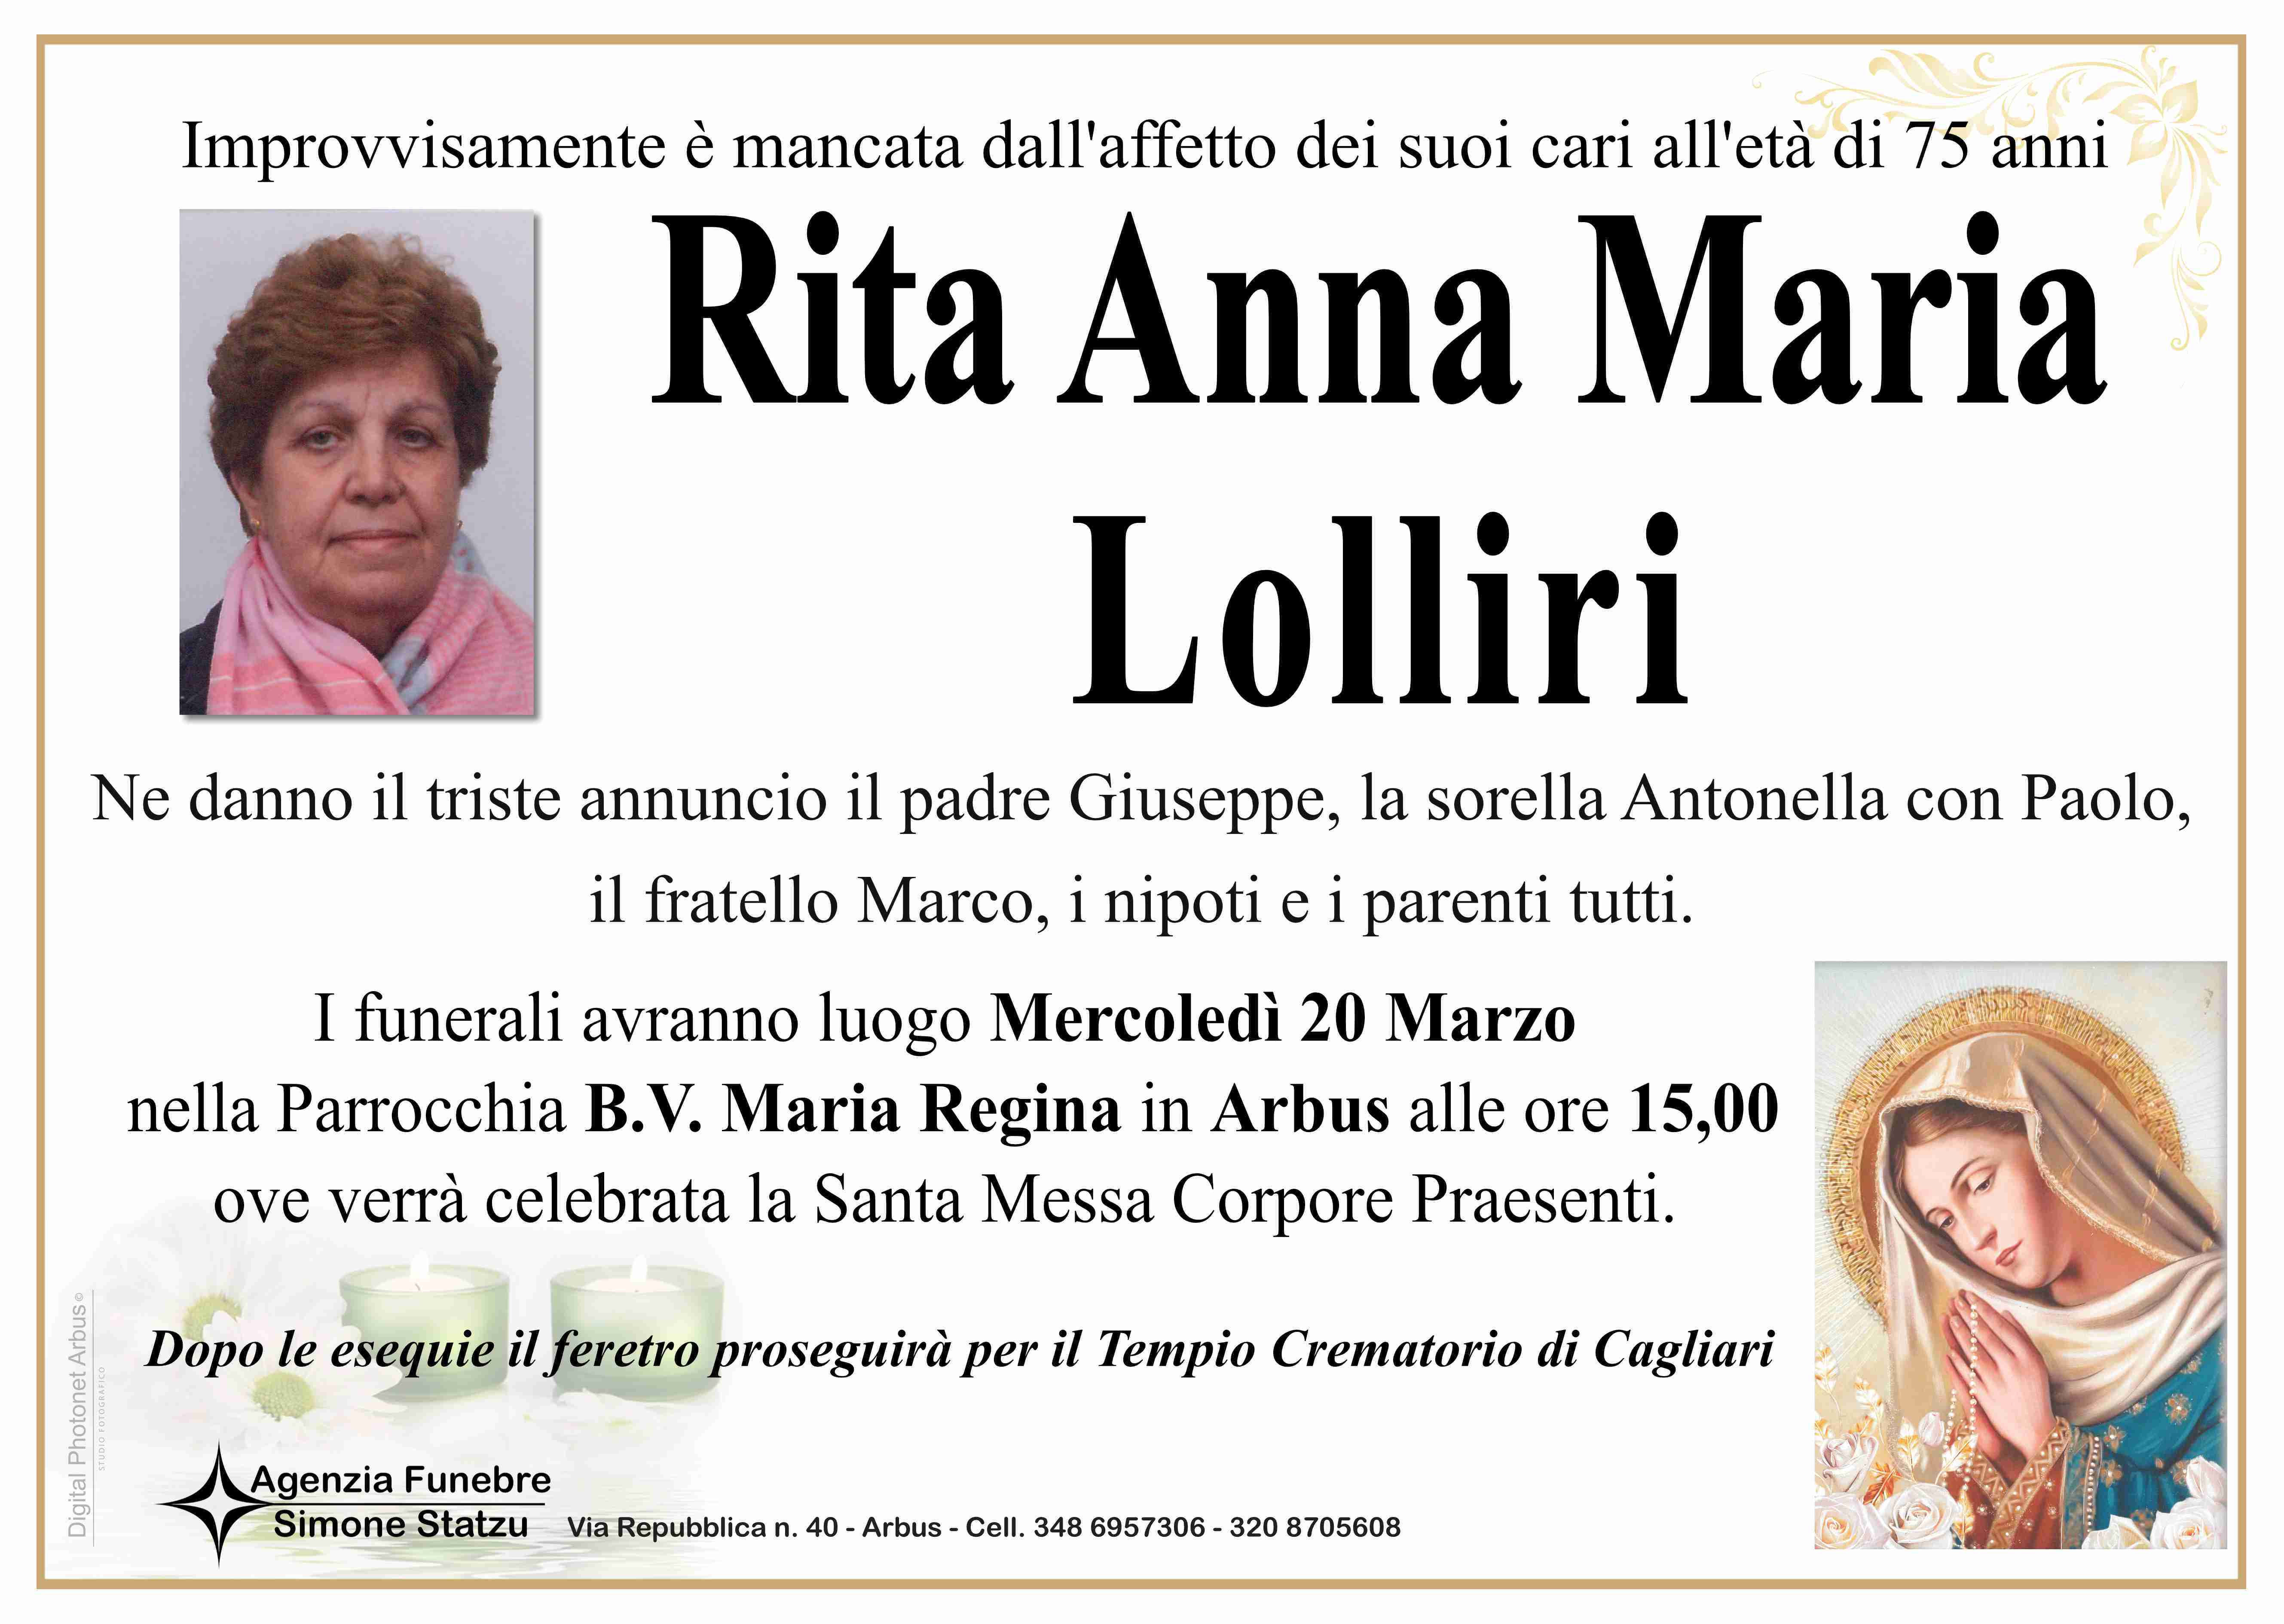 Rita Anna Maria Lolliri